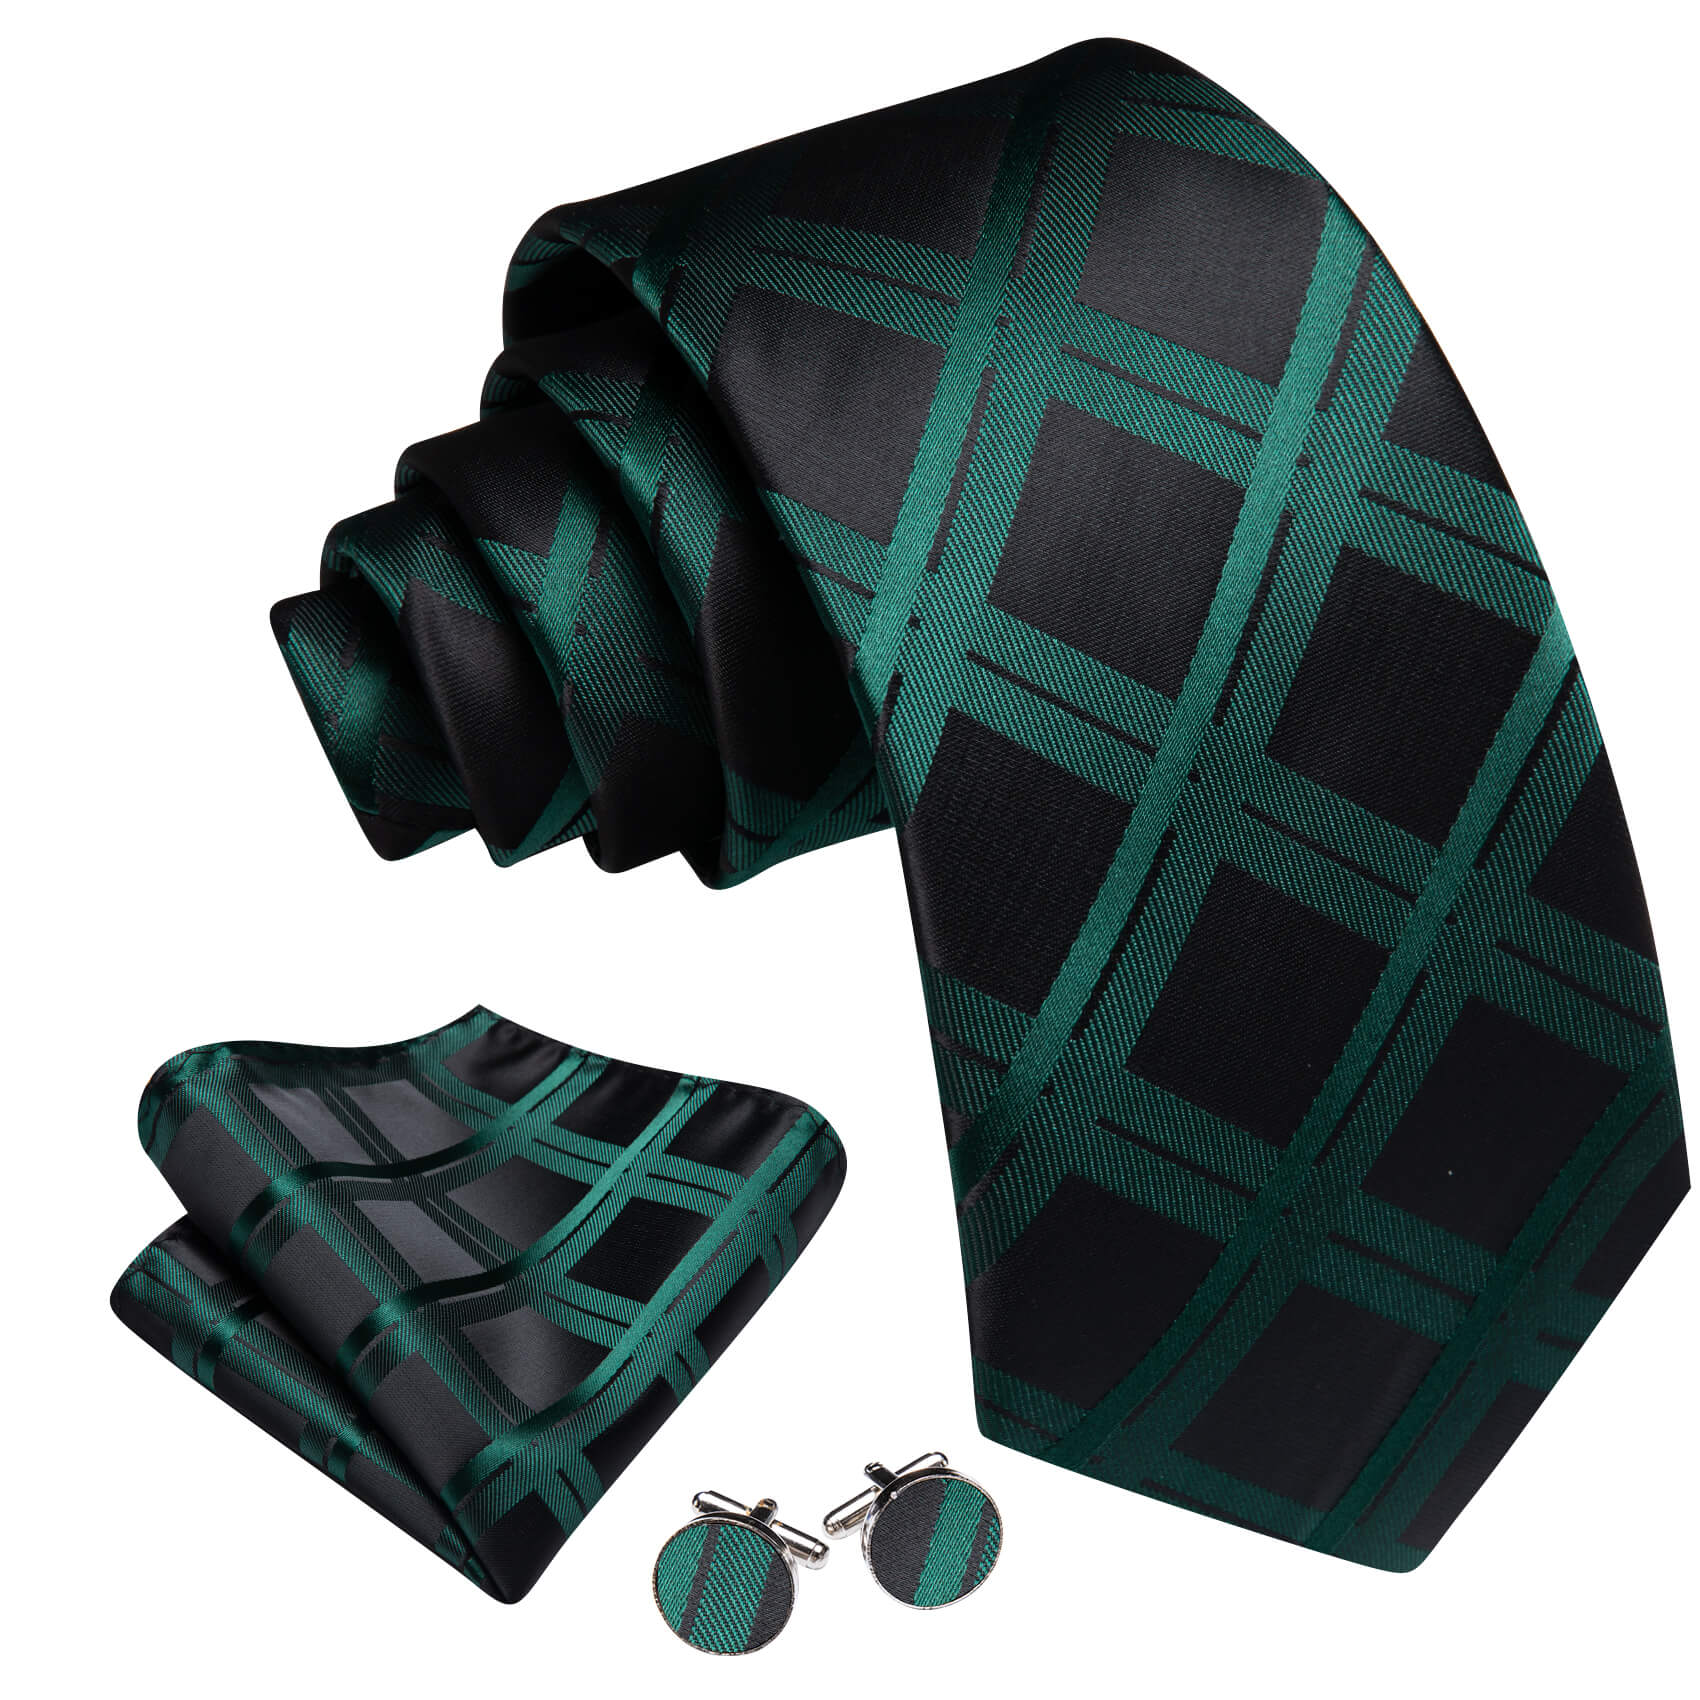 Barry.wang Plaid Tie Black Dark Green Men’s Silk Tie Hanky Cufflinks Set New Arrival